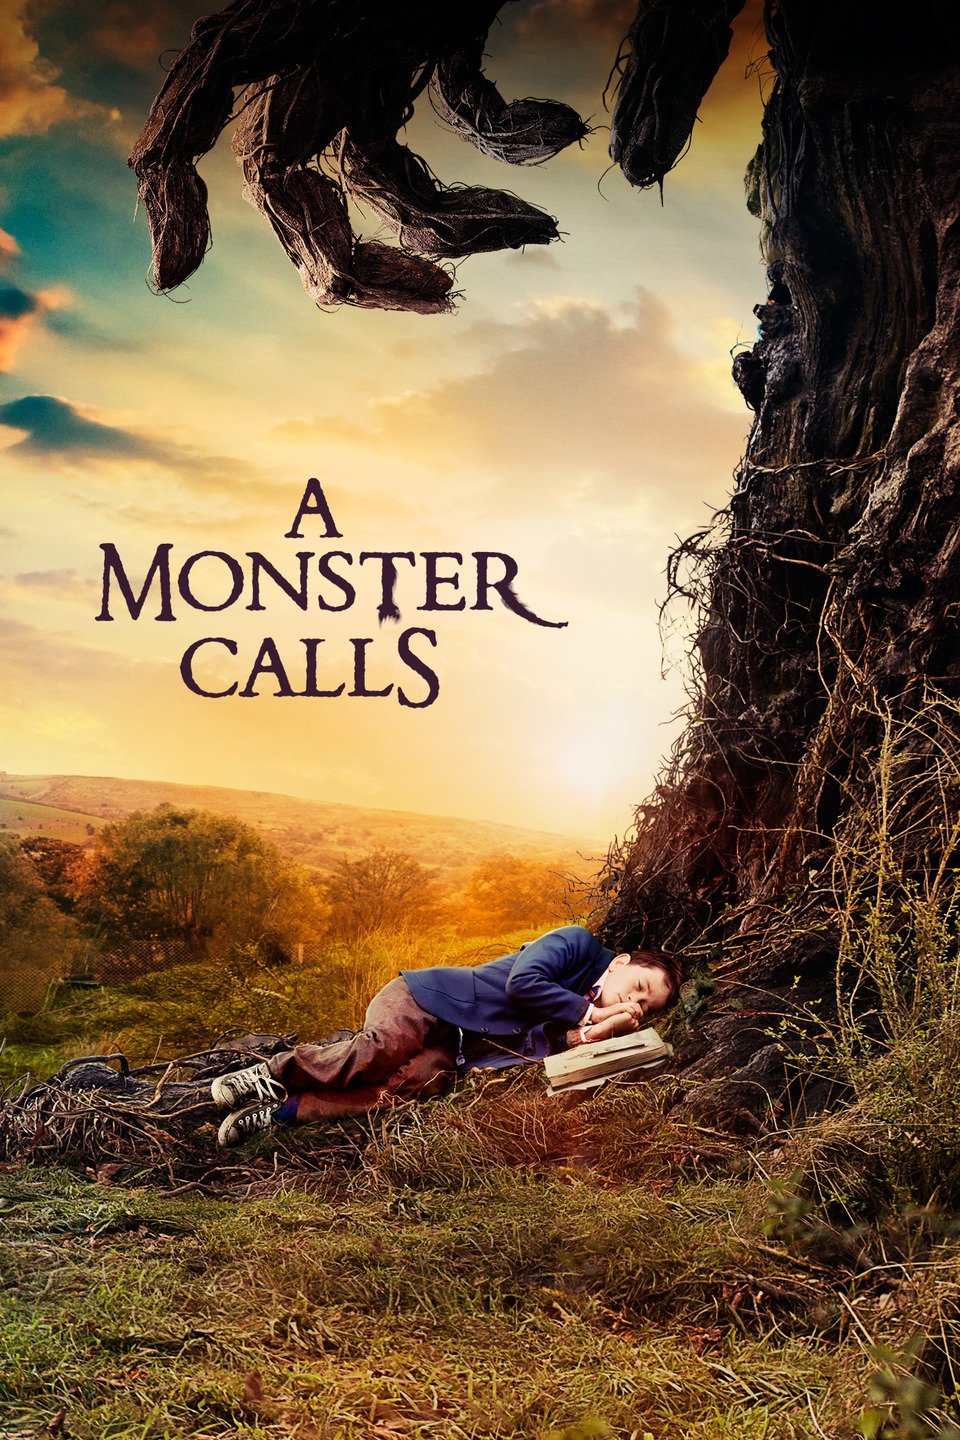 [MINI Super-HQ] A Monster Calls (2016) มหัศจรรย์เรียกอสูร [1080p] [พากย์ไทย 5.1 + เสียงอังกฤษ 5.1] [บรรยายไทย + อังกฤษ] [เสียงไทย + ซับไทย] [OPENLOAD]